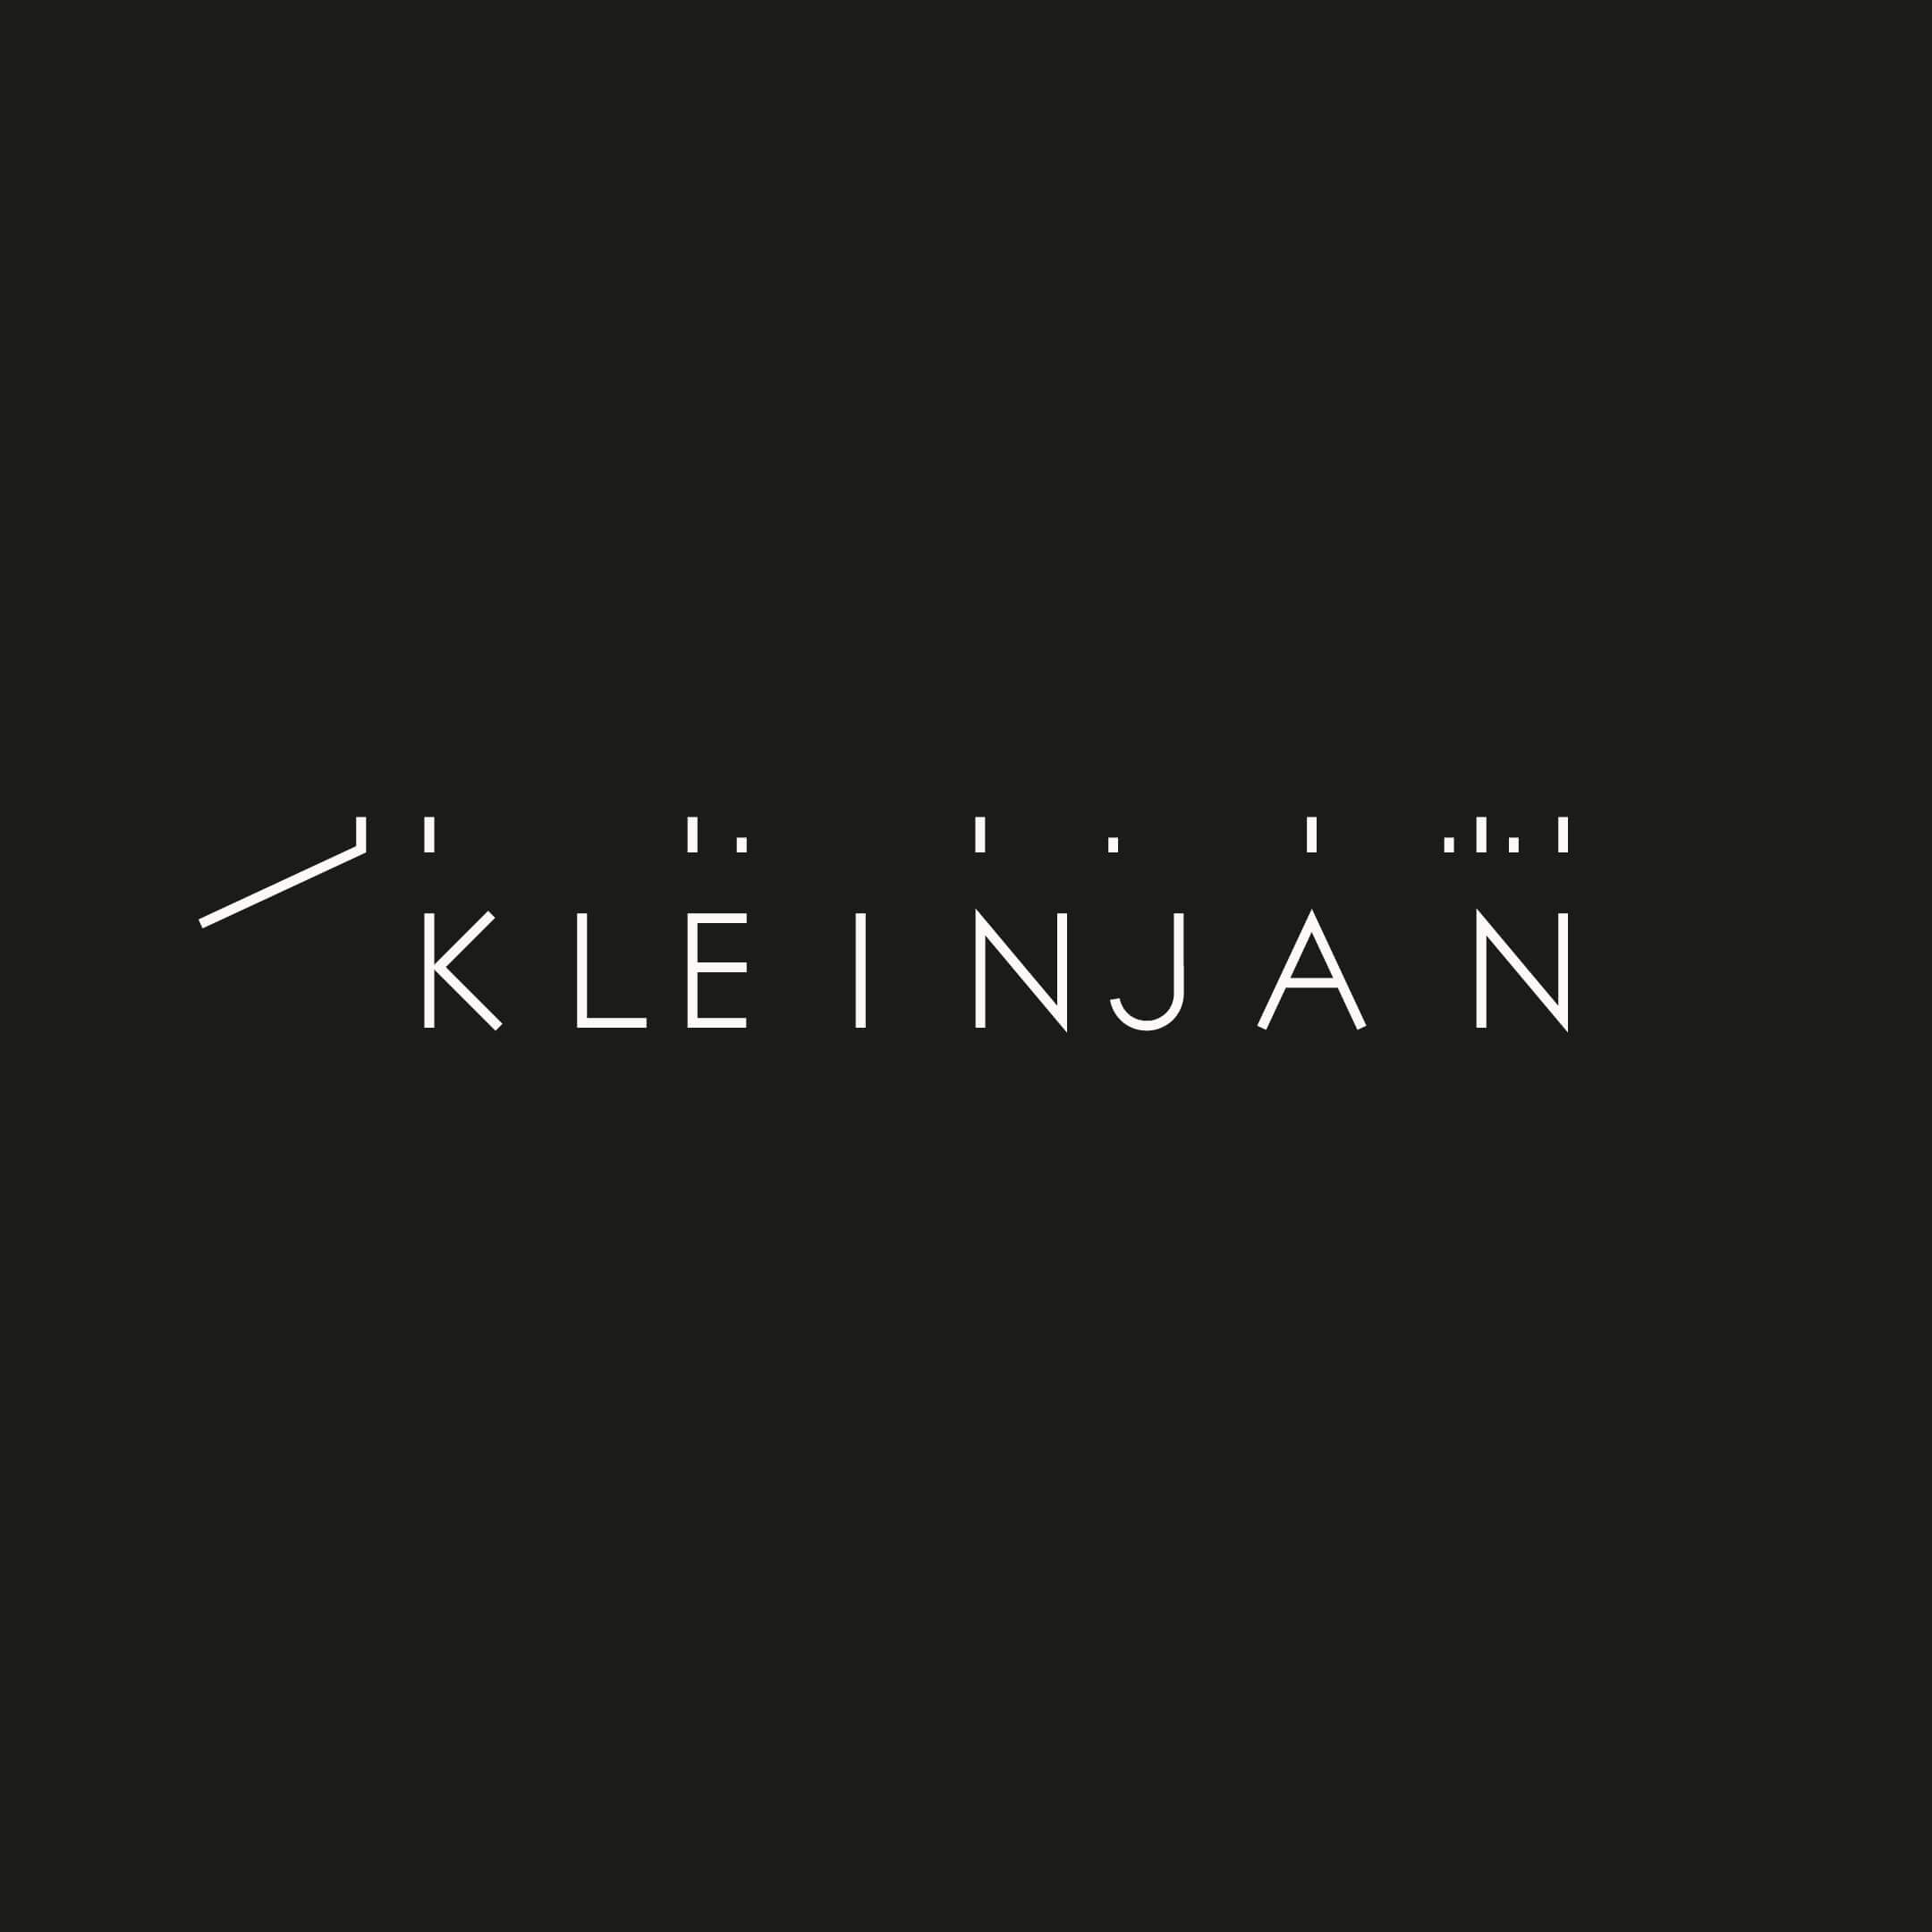 Kleinjan Photography Identity